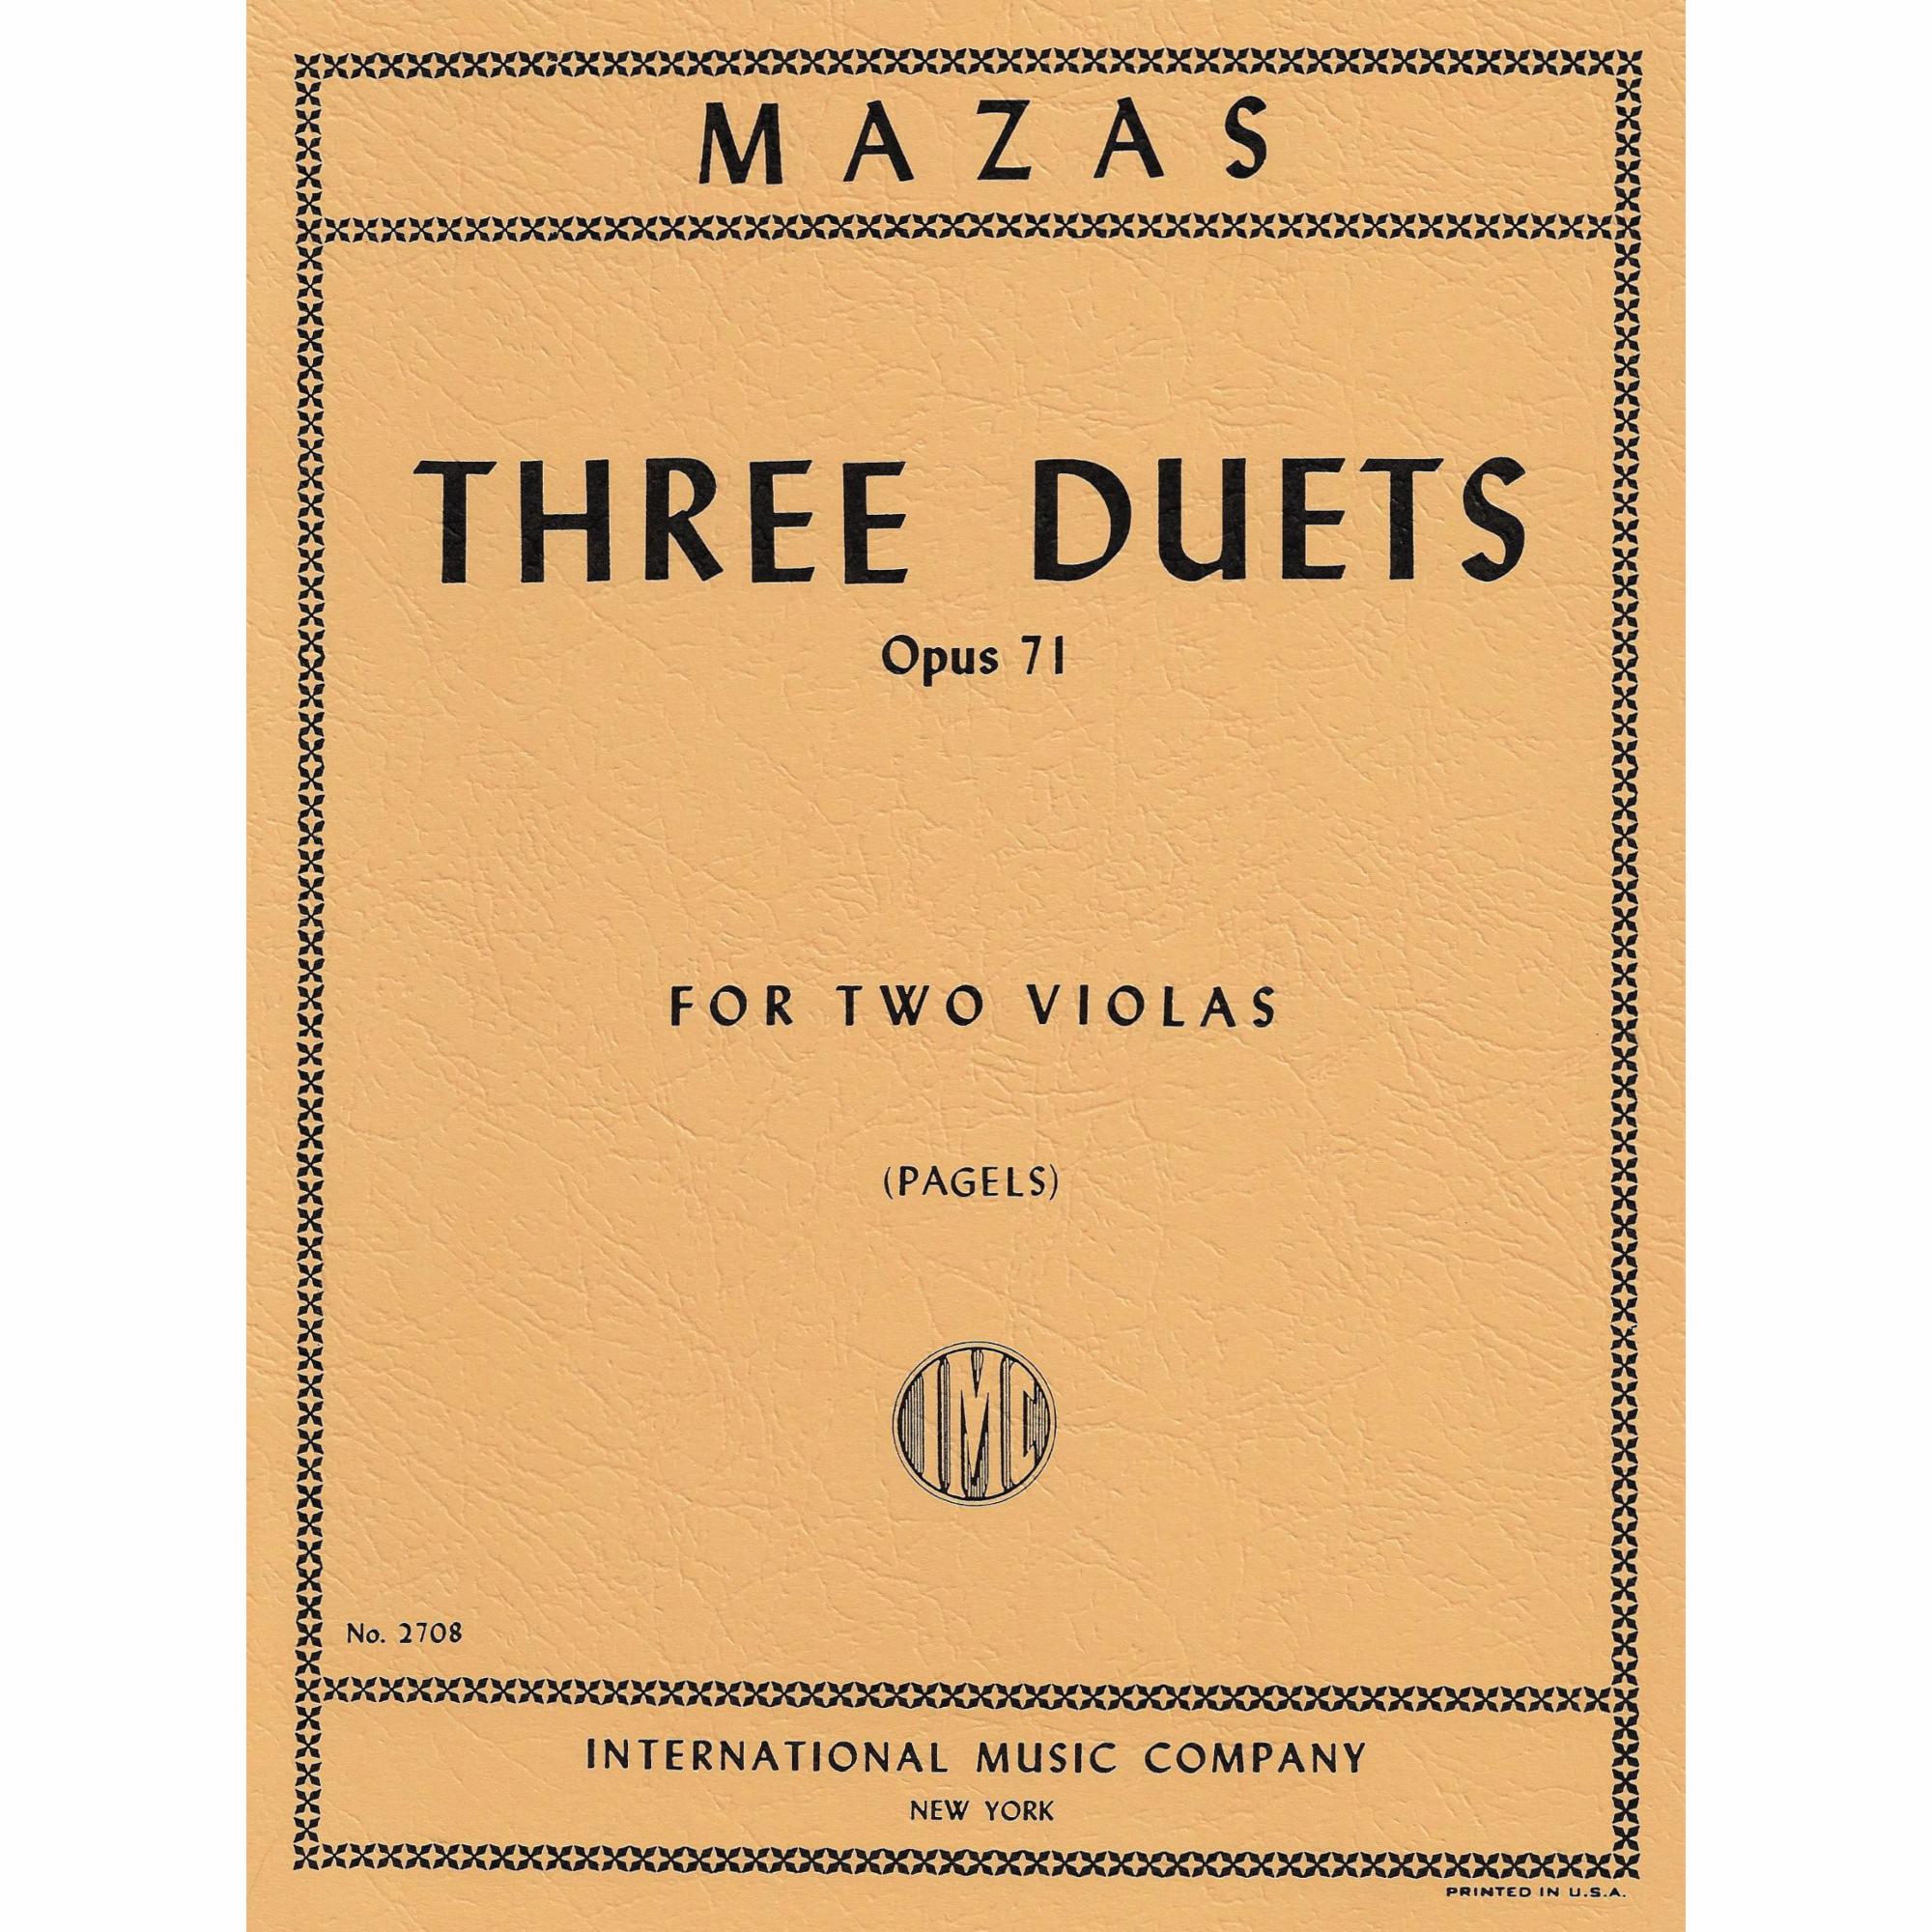 Mazas -- Three Duets, Op. 71 for Two Violas